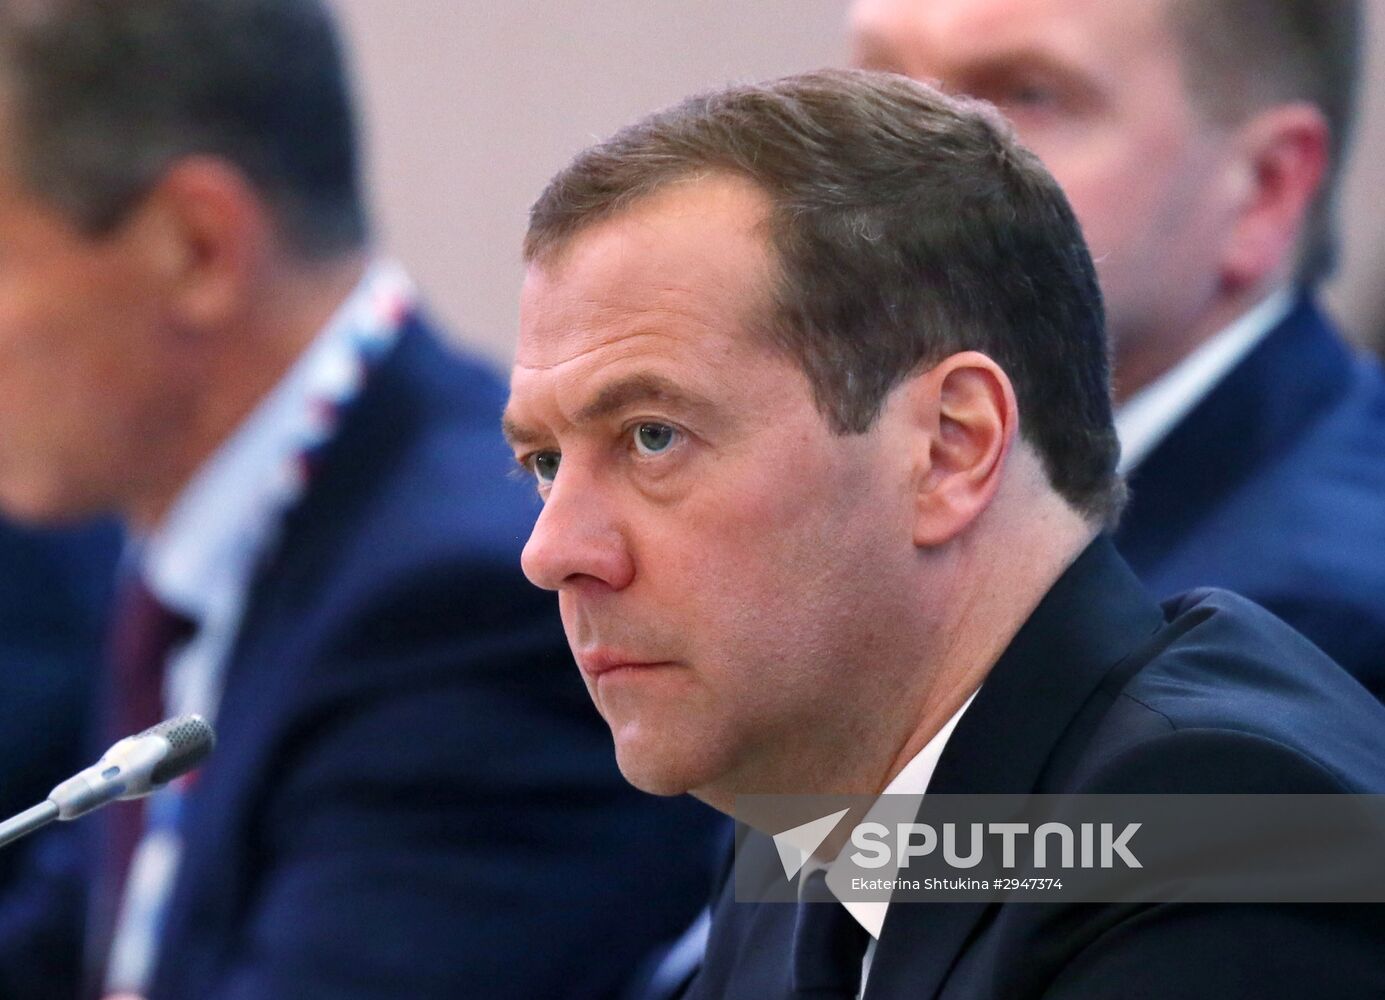 Prime Minister Dmitry Medvedev at 15th Sochi International Investment Forum 2016